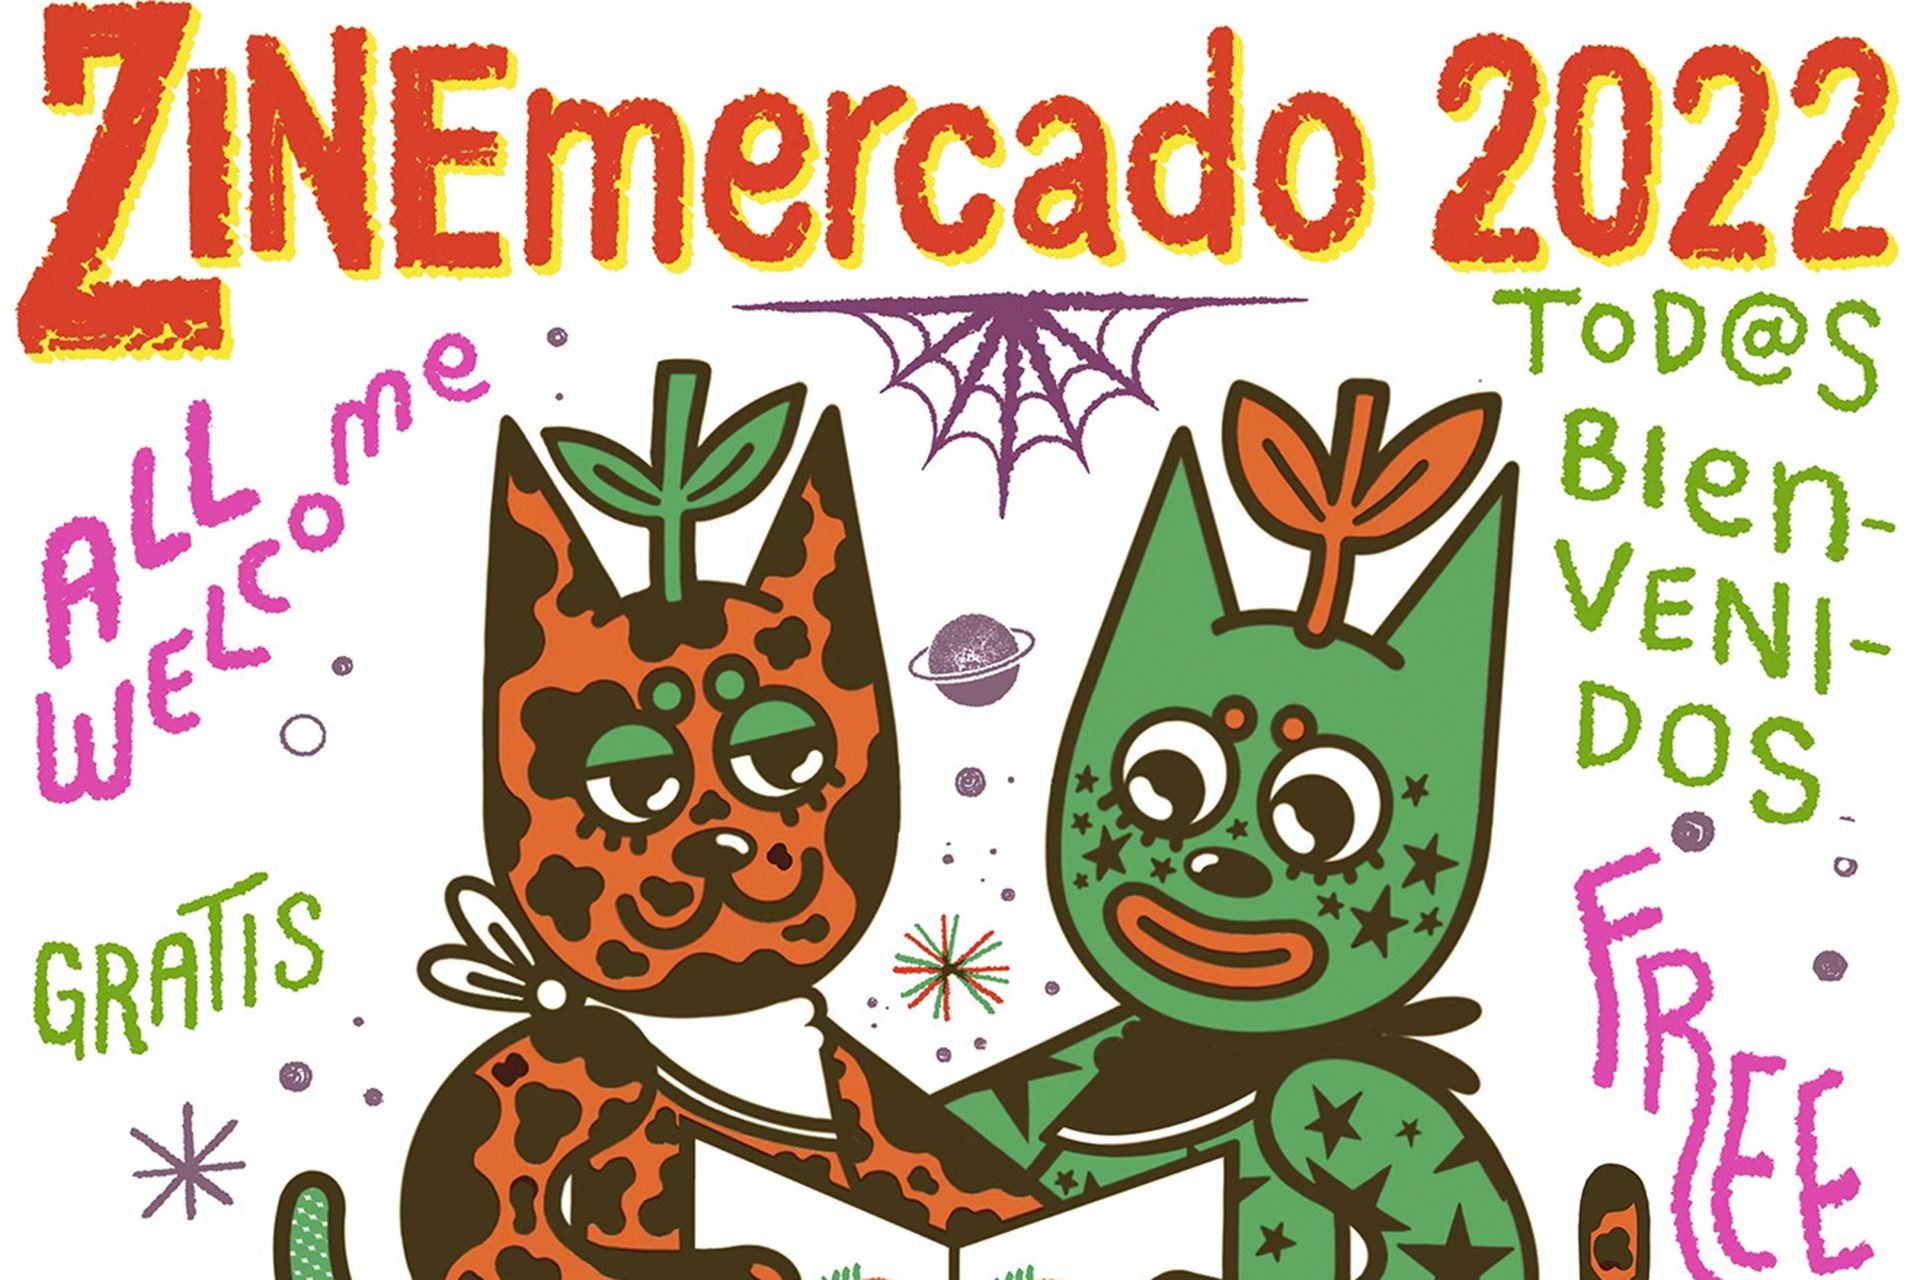 ZINEmercado 2022 "all welcome" "todos bienvenidos" "free" two cats reading a zine